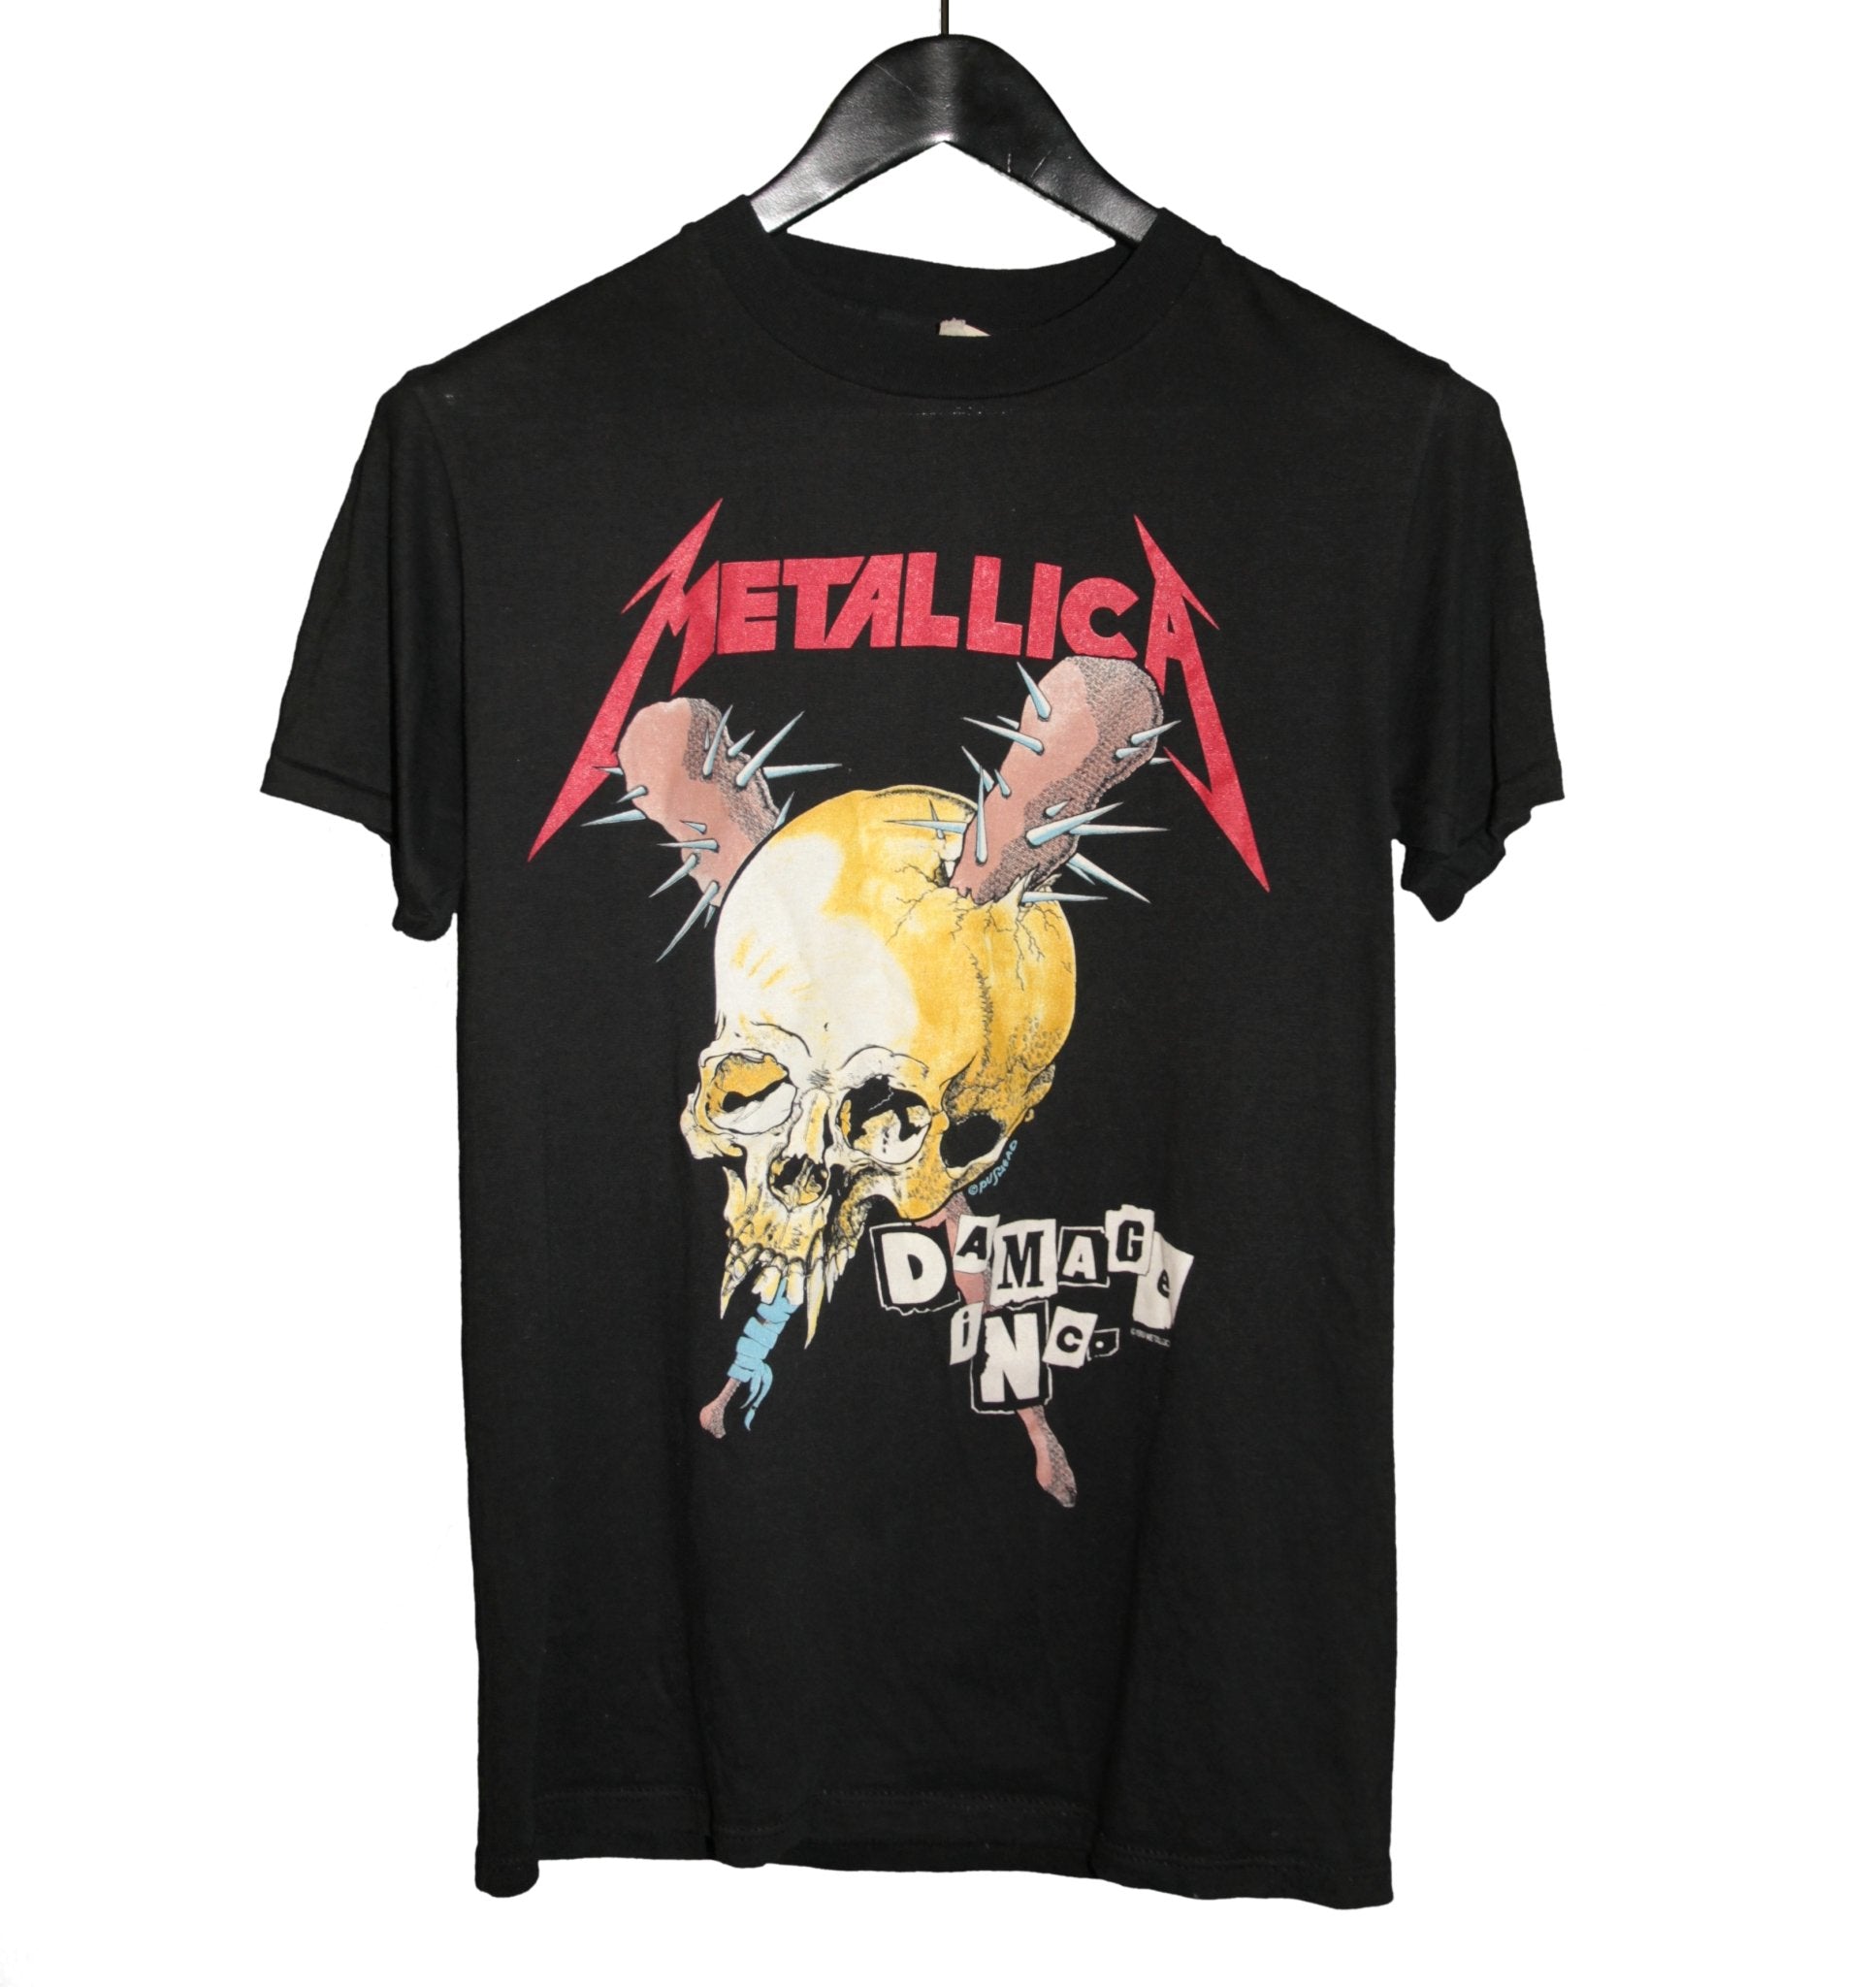 Metallica 1987 Damage Inc Tour Shirt – Faded AU